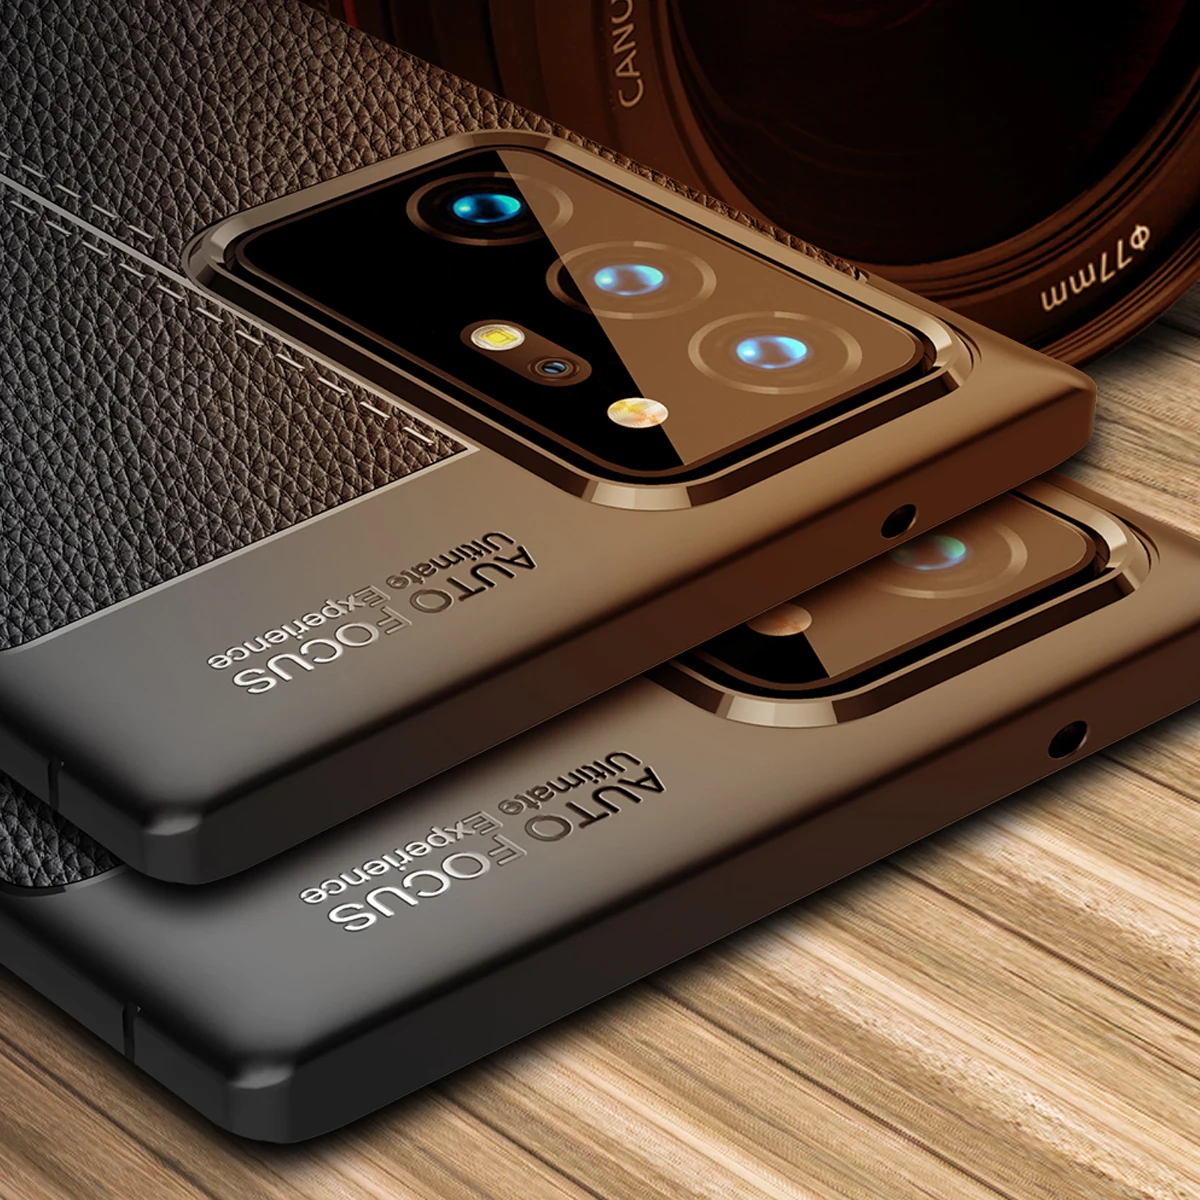 kwmobile Carcasa Compatible con Samsung Galaxy S20 Cover Trasero en Oro Rosa Metalizado Funda de Silicona para móvil